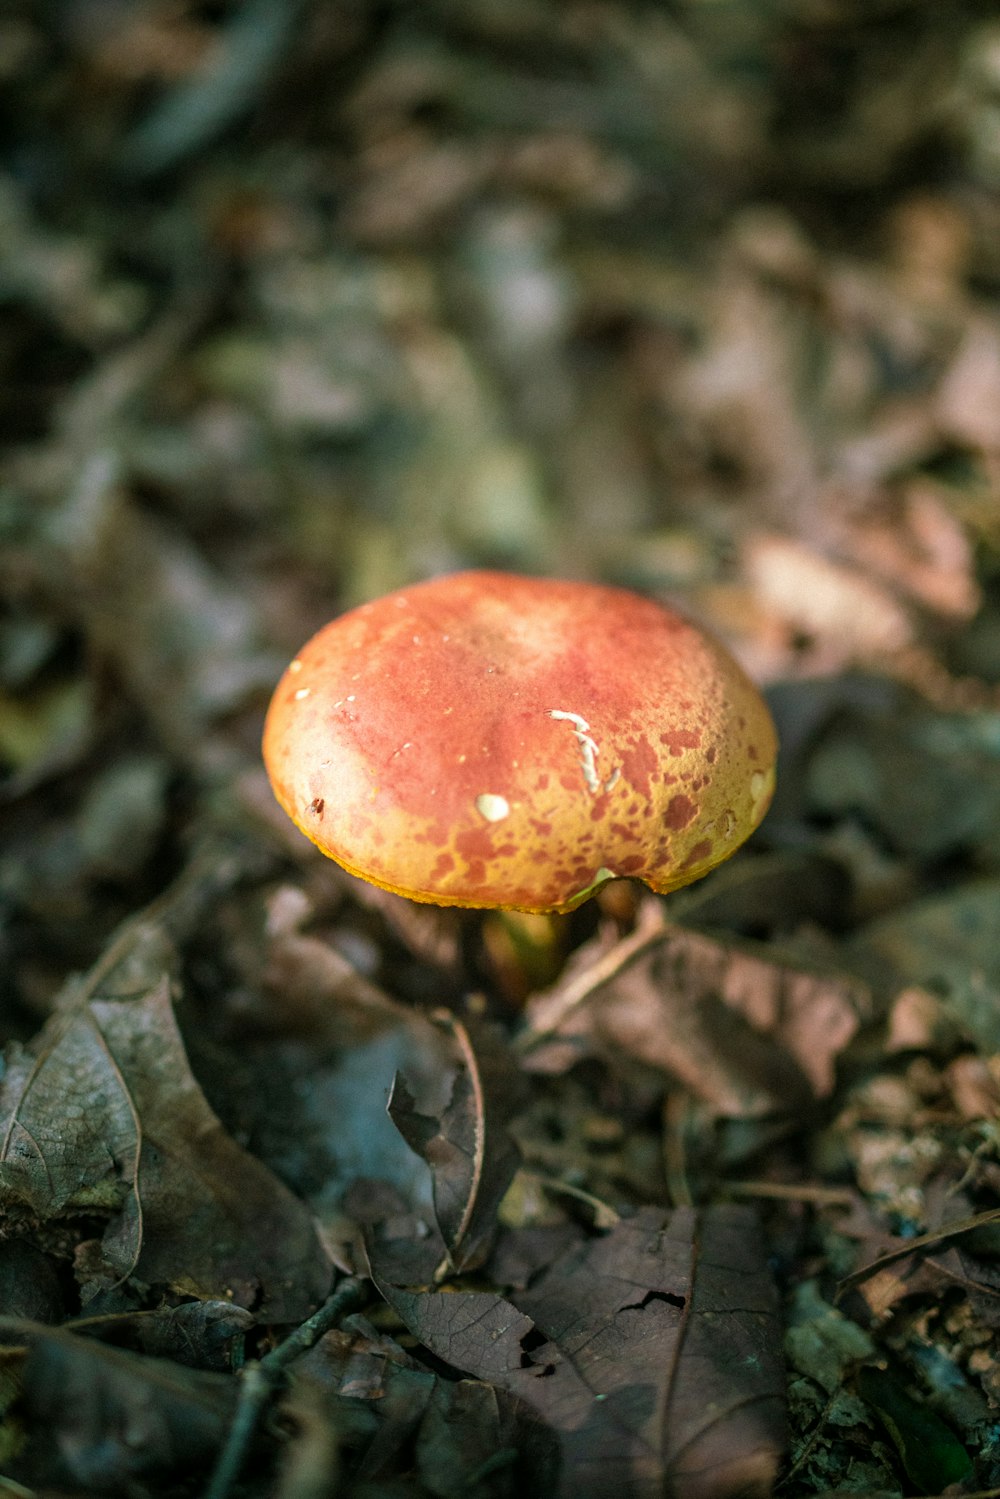 red and brown mushroom on brown soil